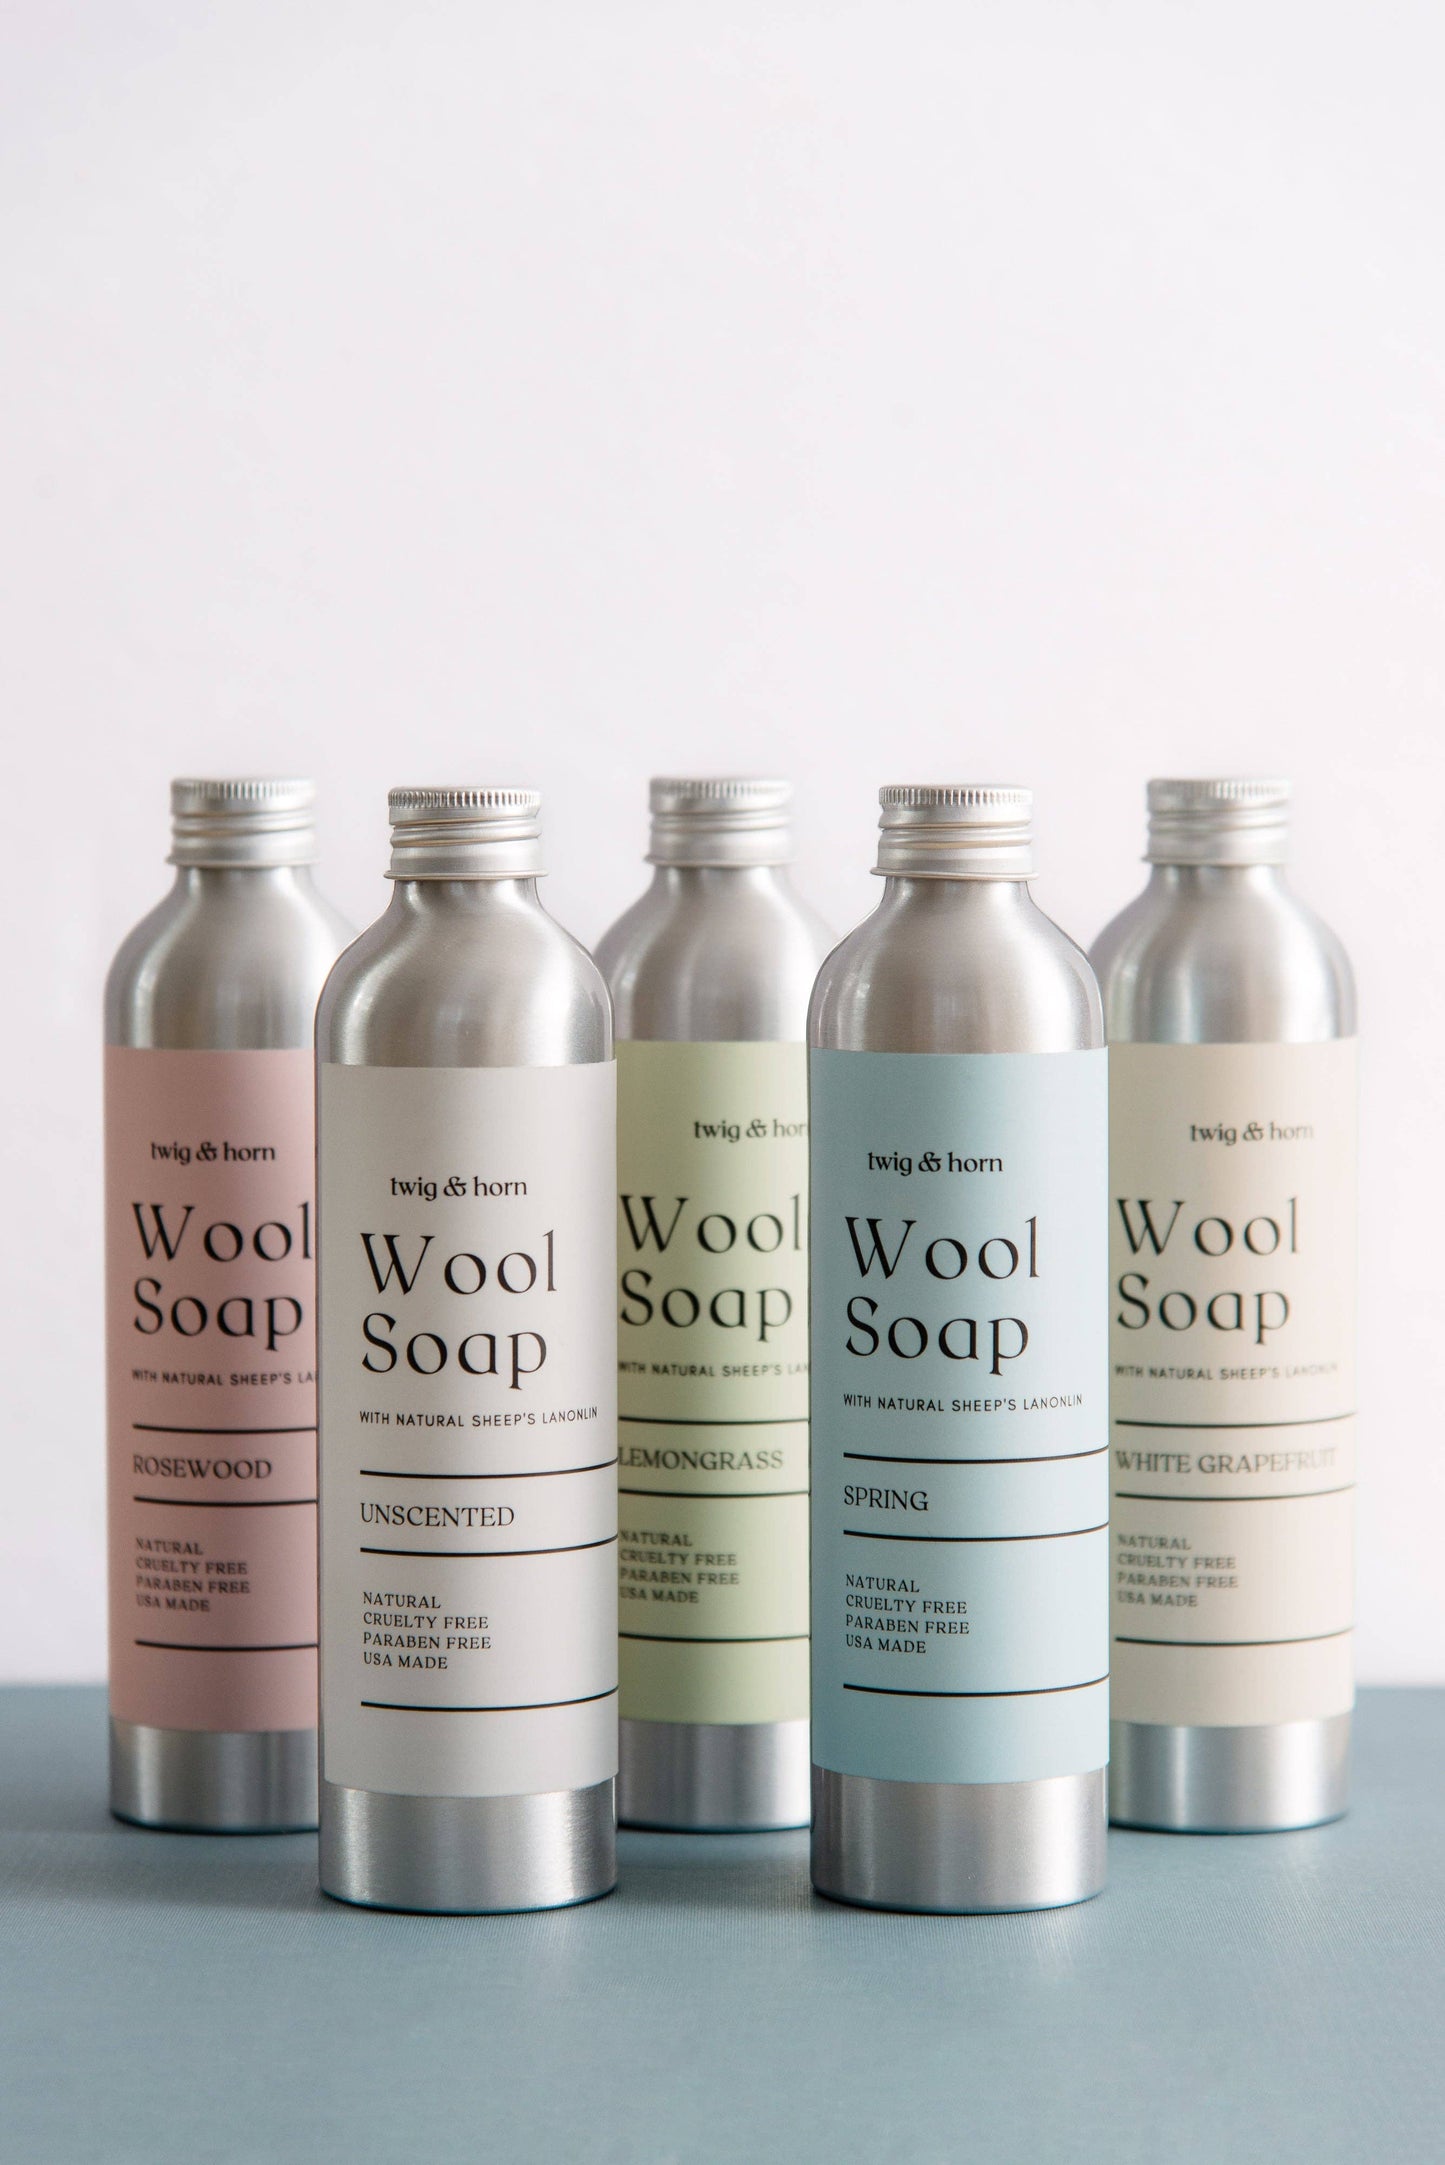 liquid lanolin wool soap: Lemongrass